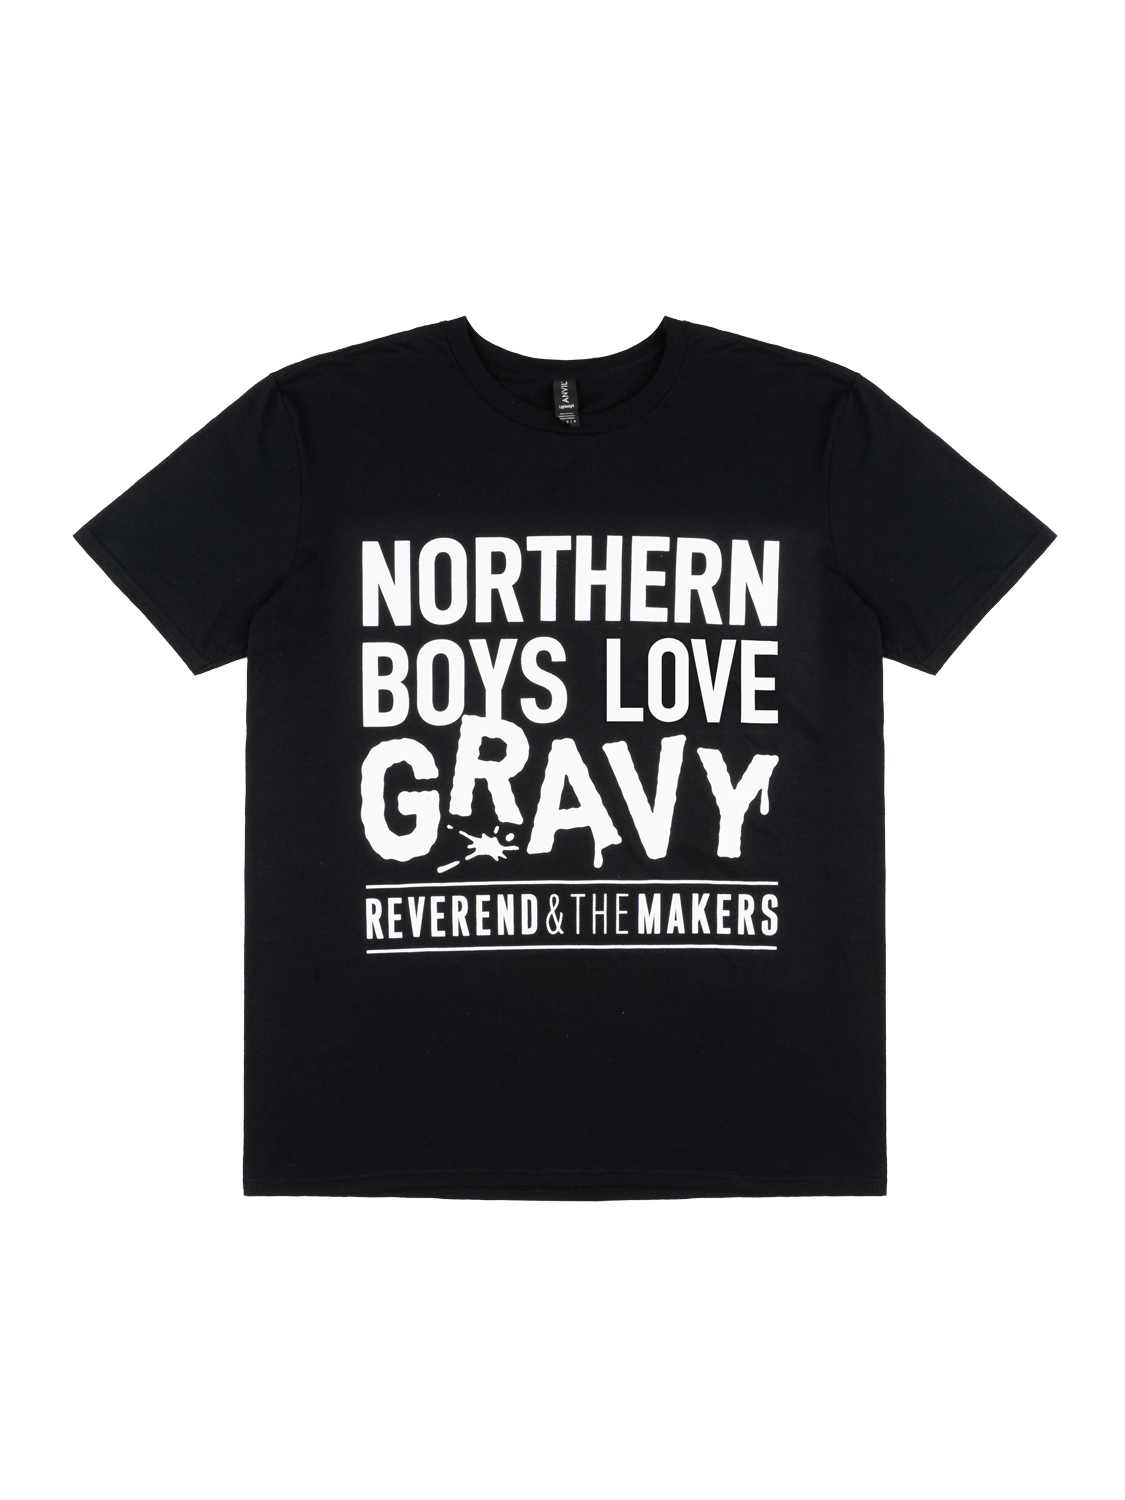 Northern Boys Love Gravy